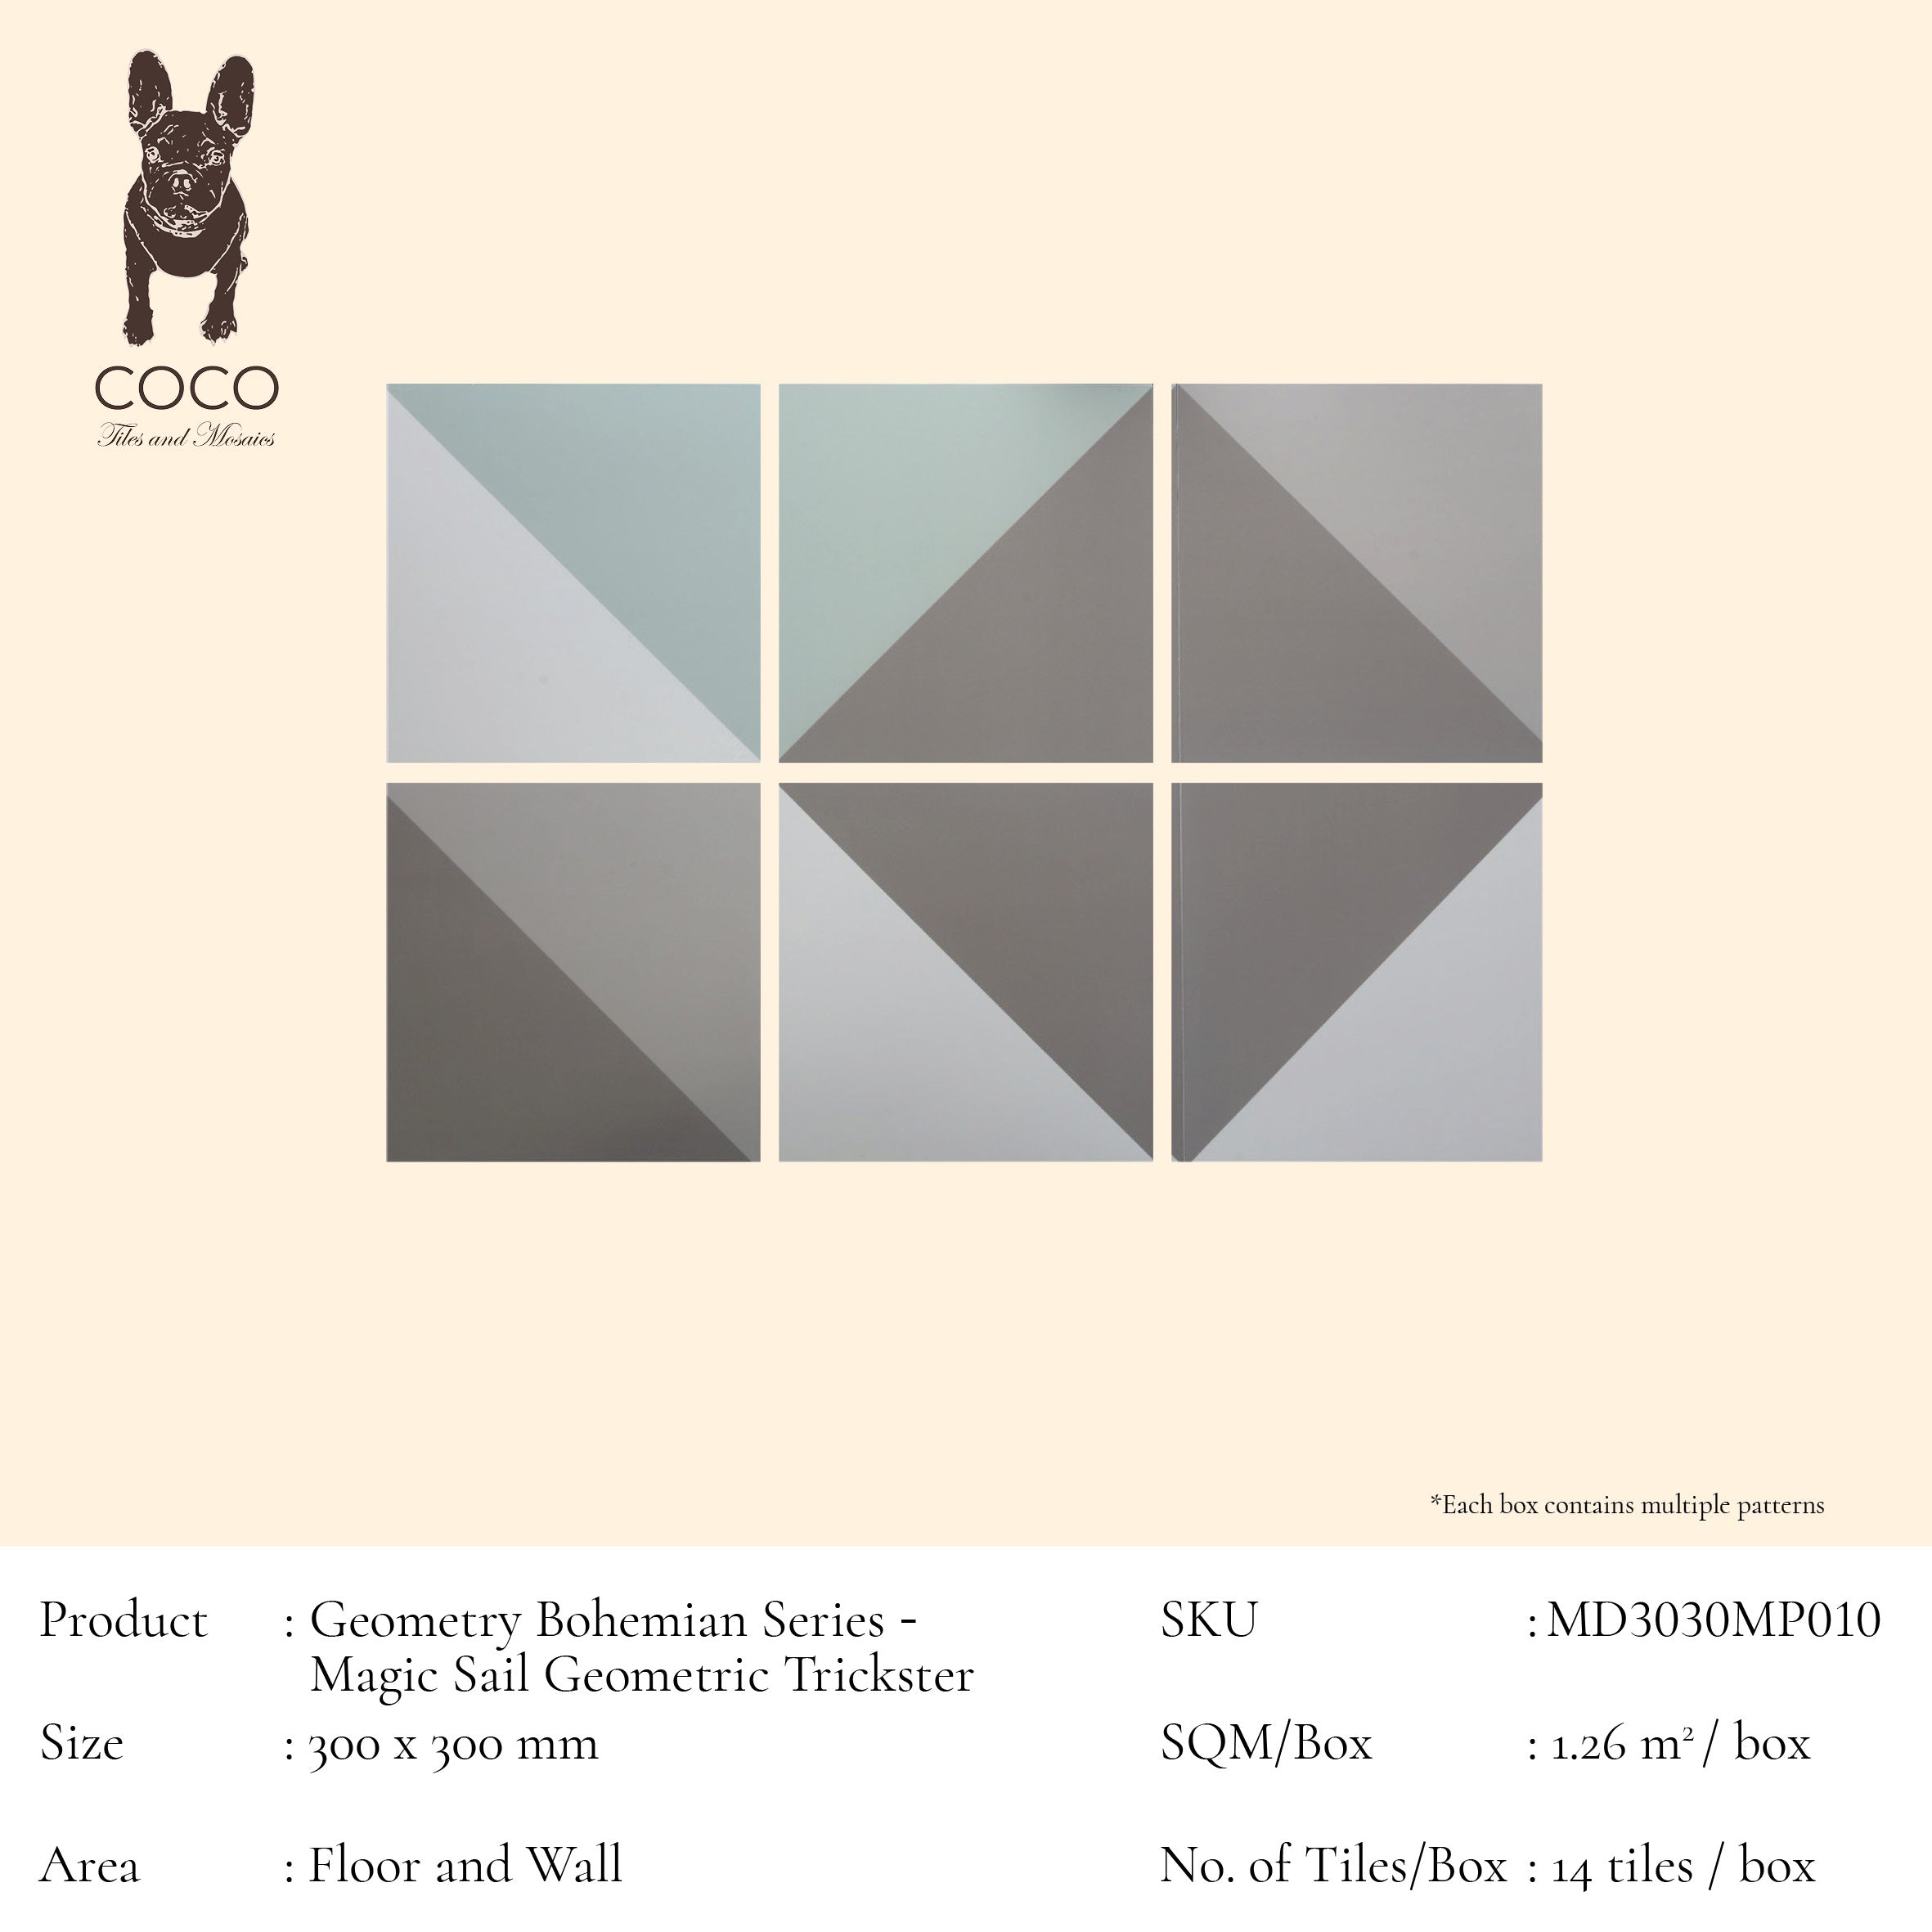 Geometry Bohemian Series - Magic Sail Geometric Trickster 300x300mm Ceramic Tile